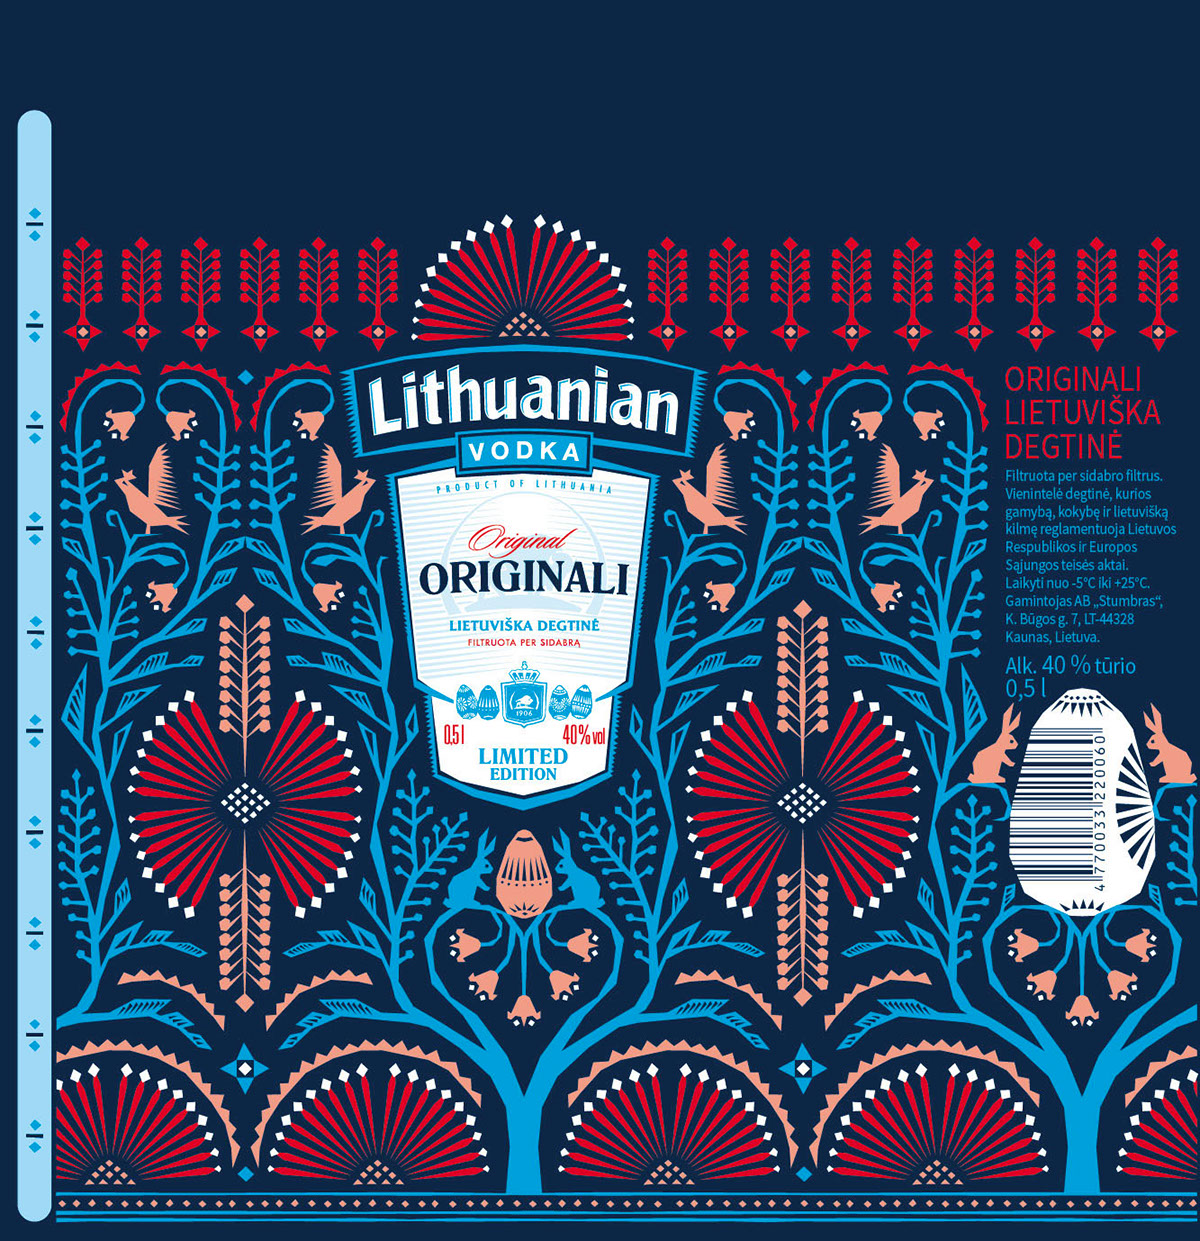 Lithuanian Vodka Adell Taivas Ogilvy Alcoholic Beverage label design